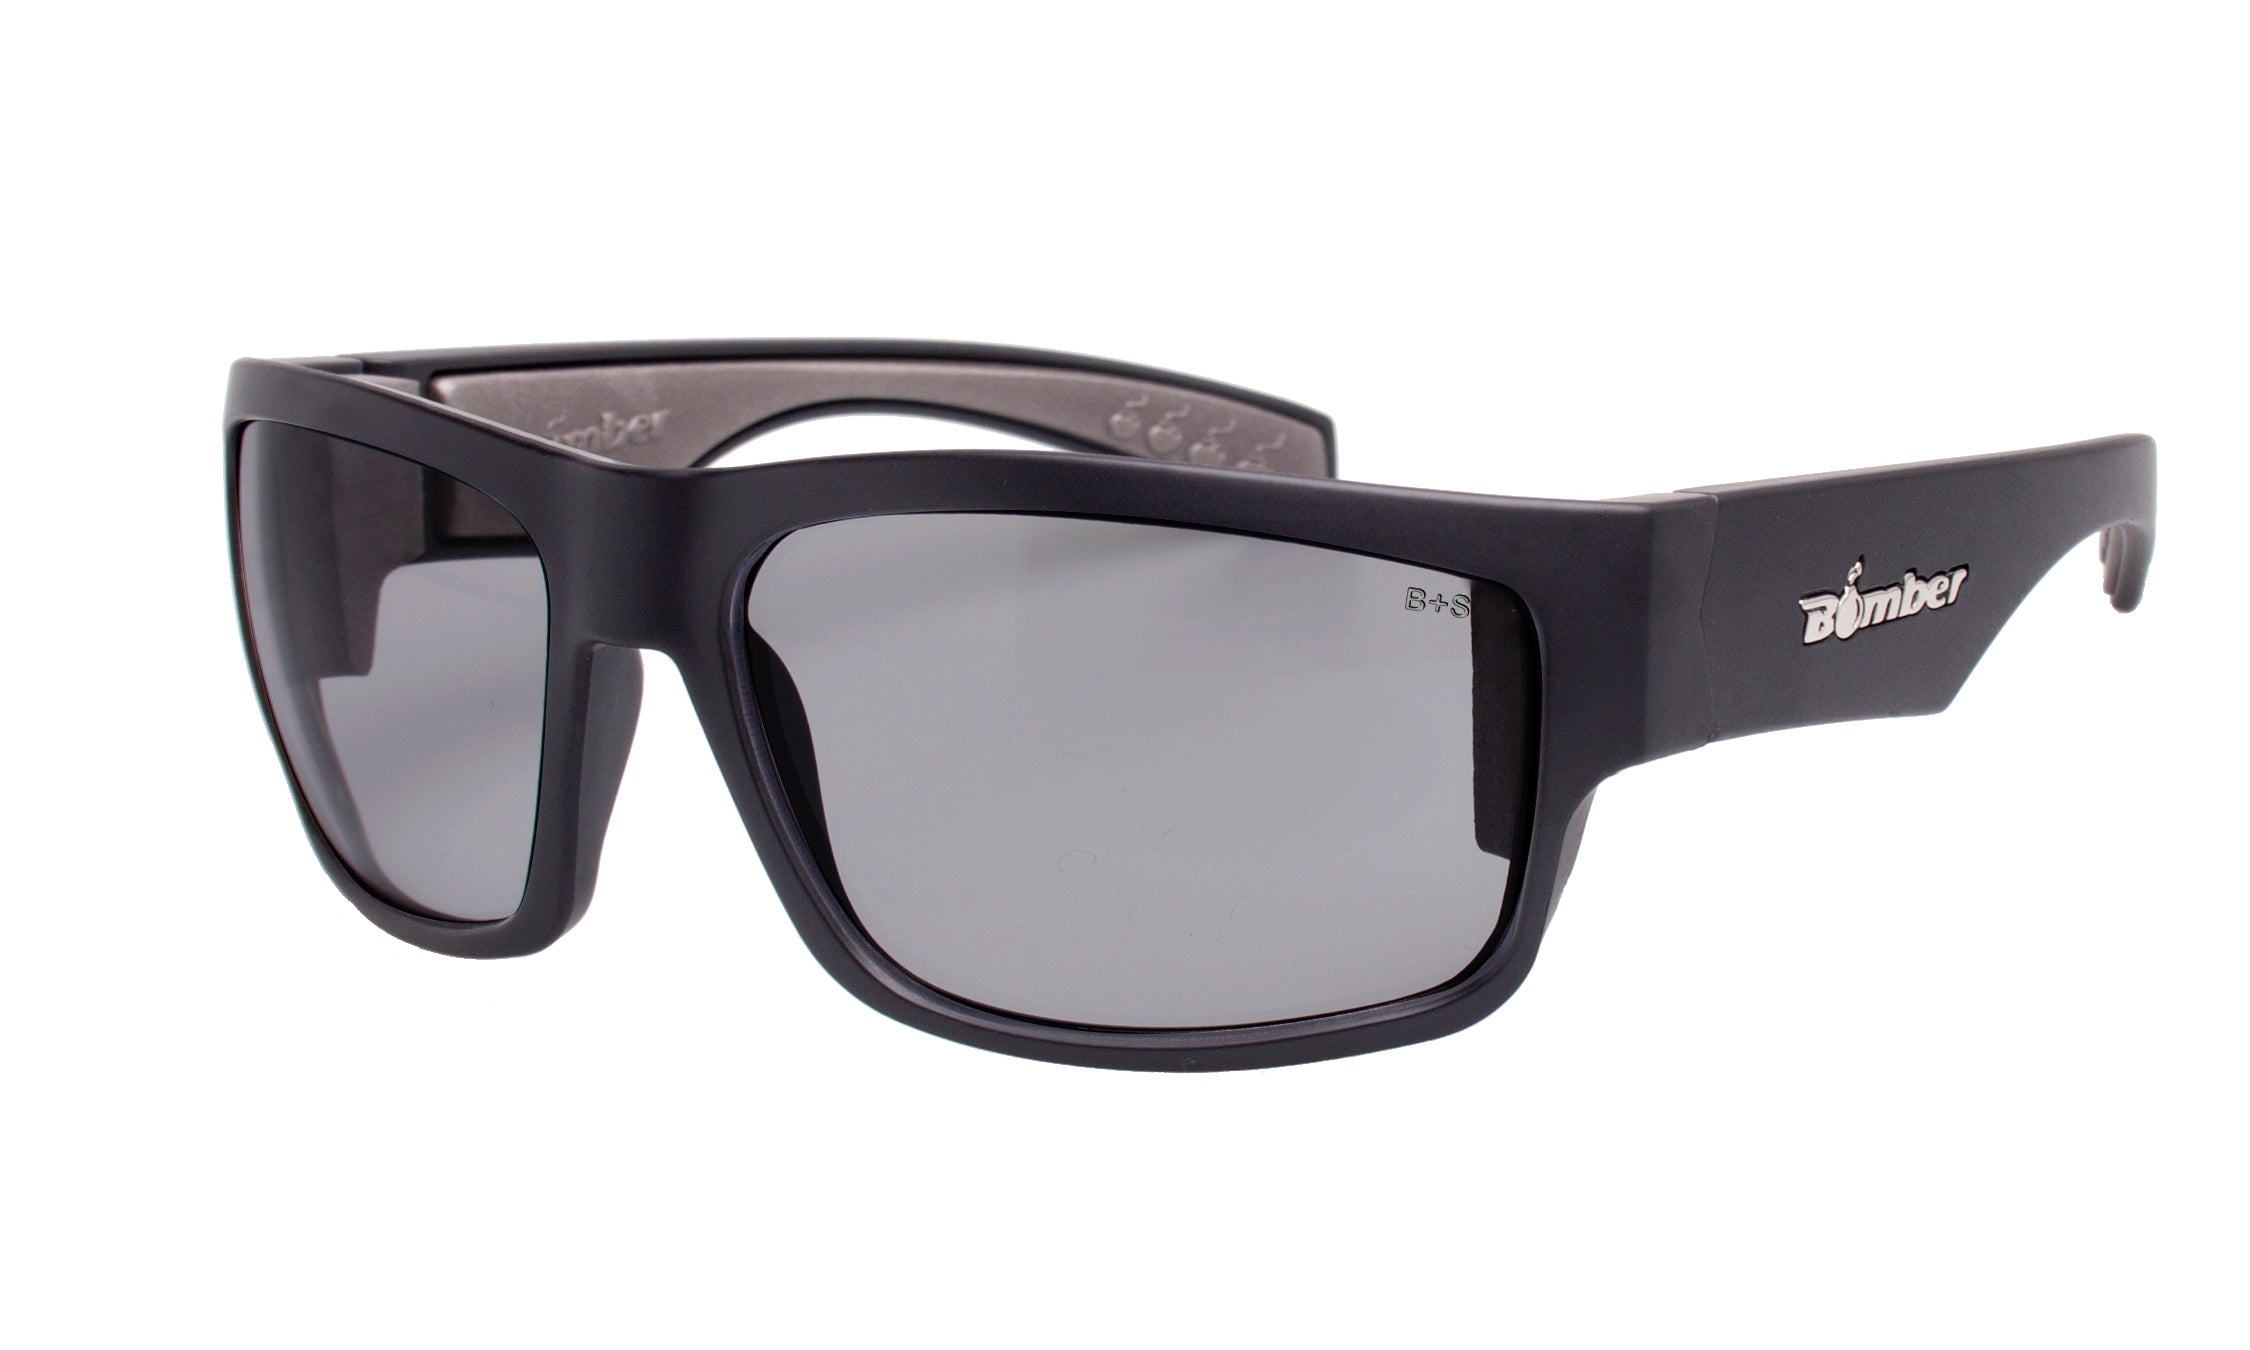 Bomber Sunglasses - Sugar Bomb Polarized Lens Black / Smoke / Gray